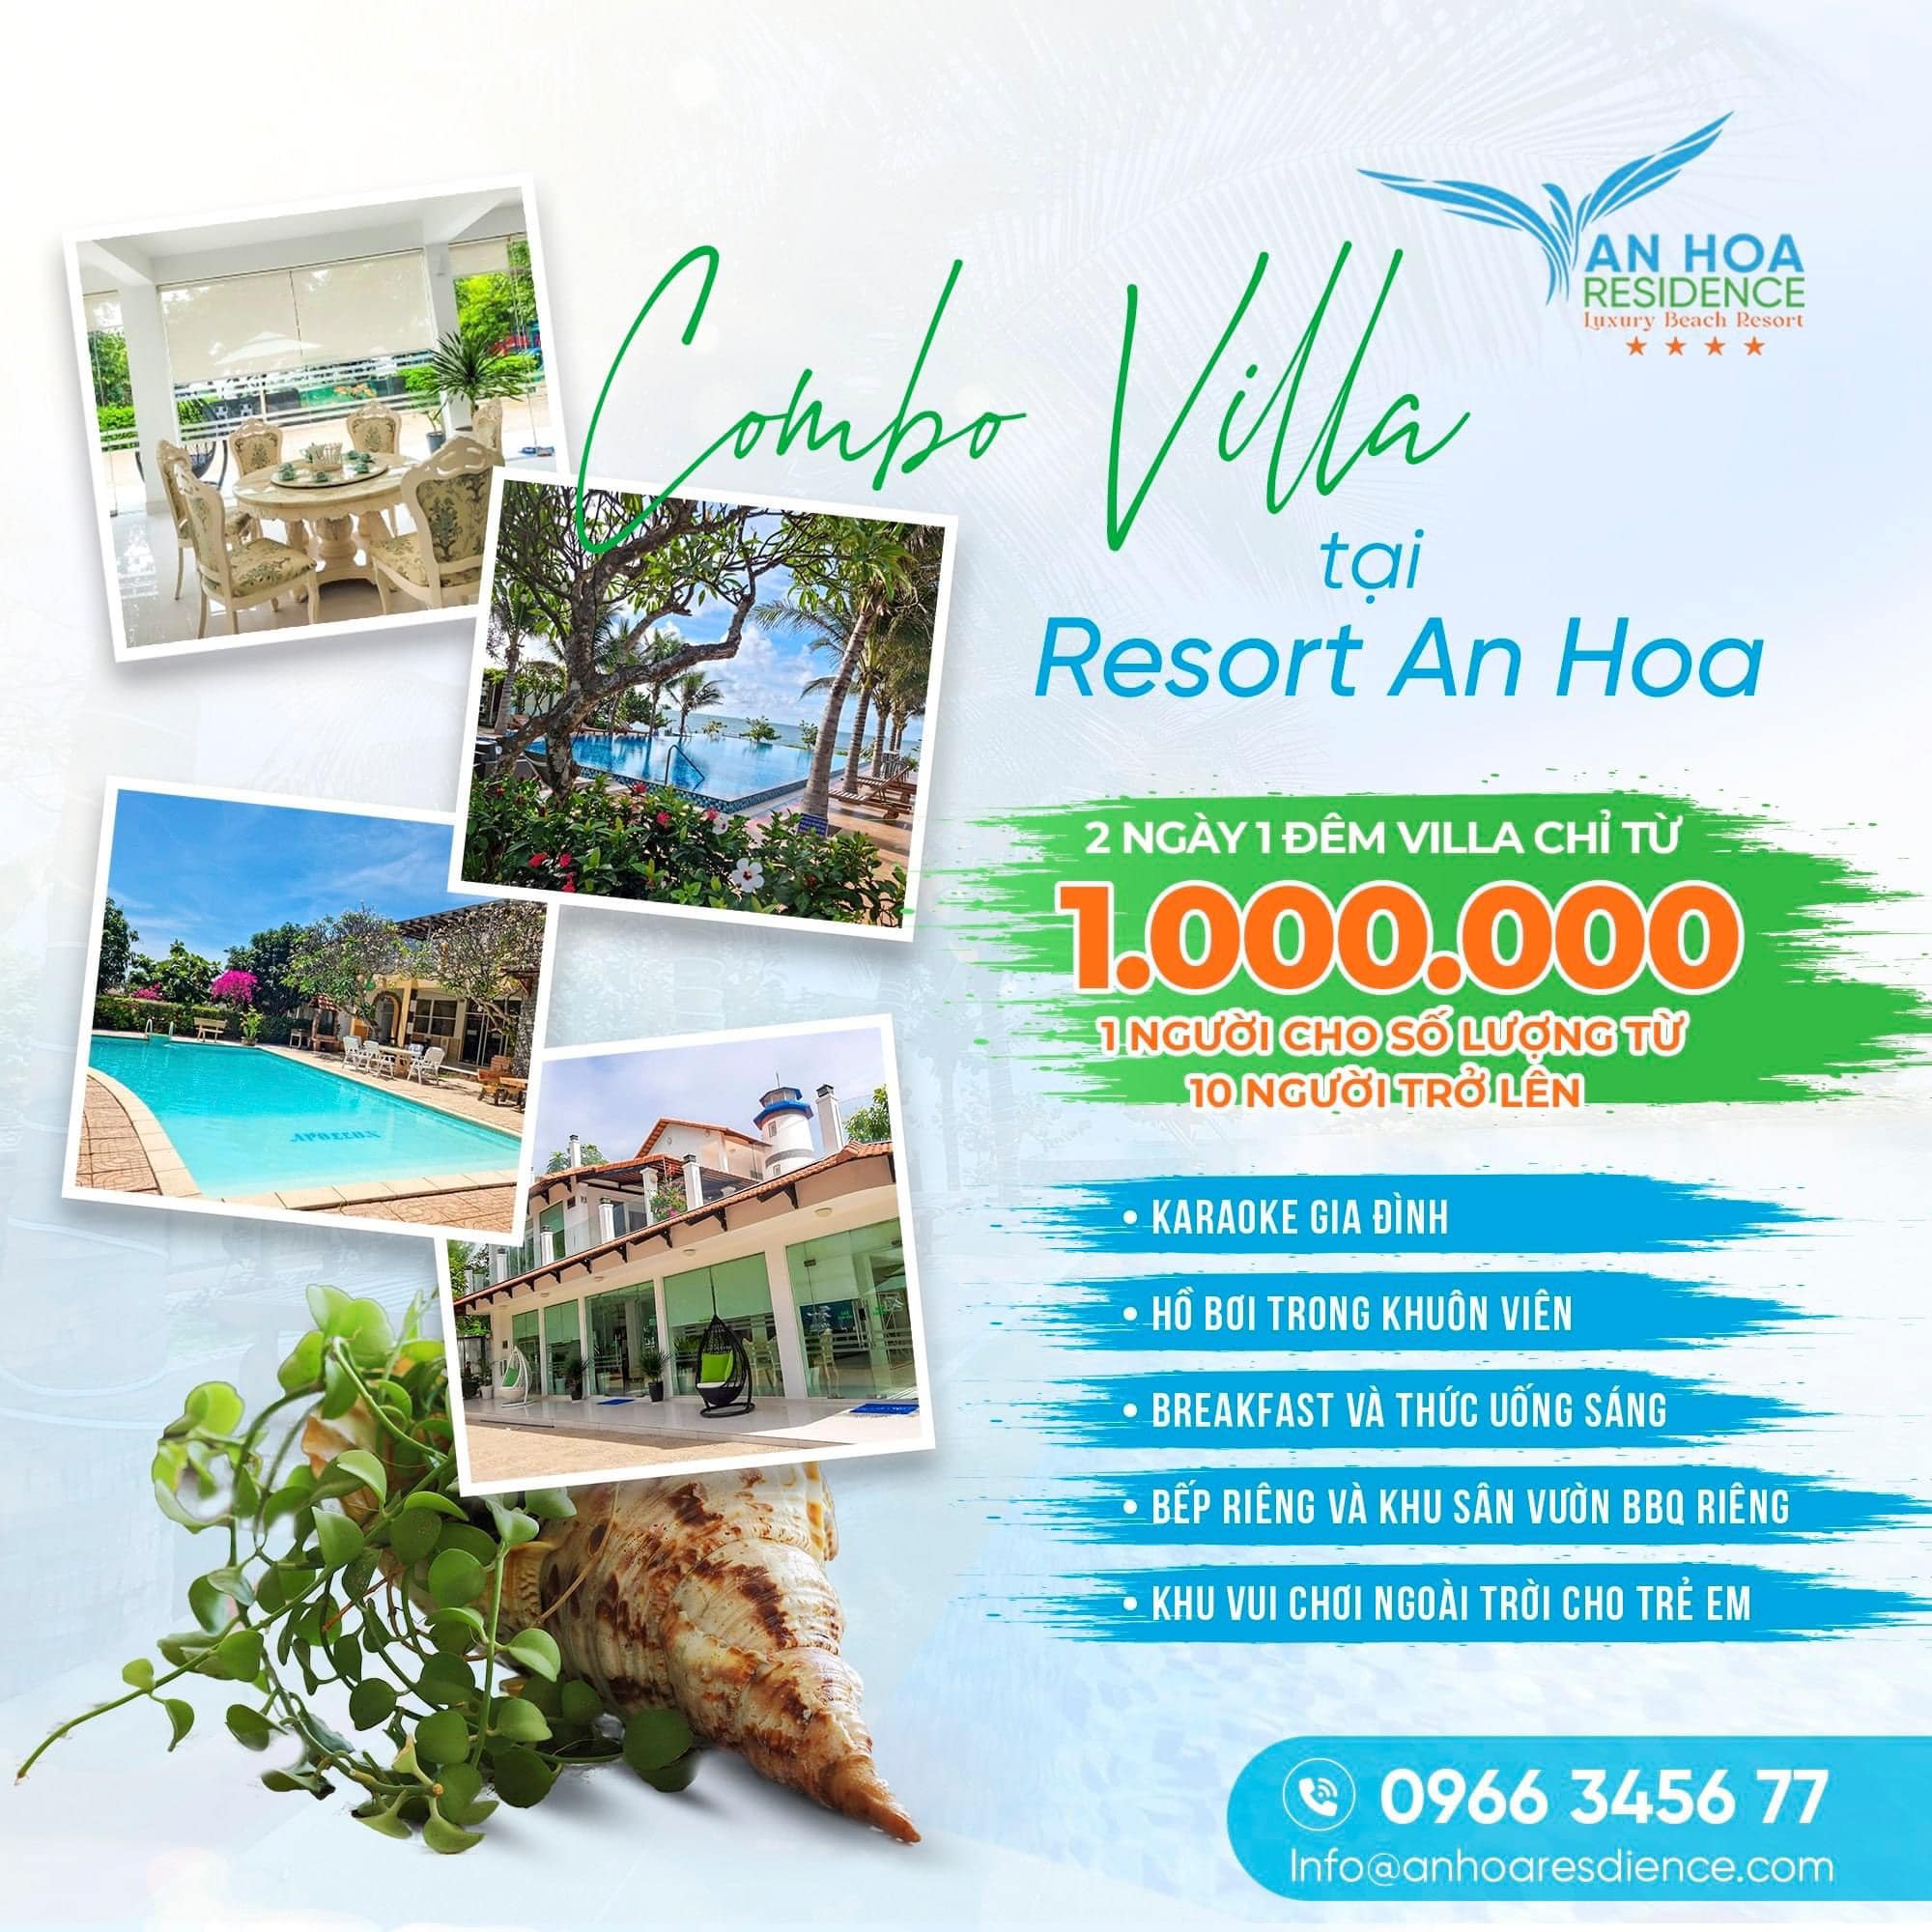 An Hoa Residence - Luxury Beach Resort ảnh 1